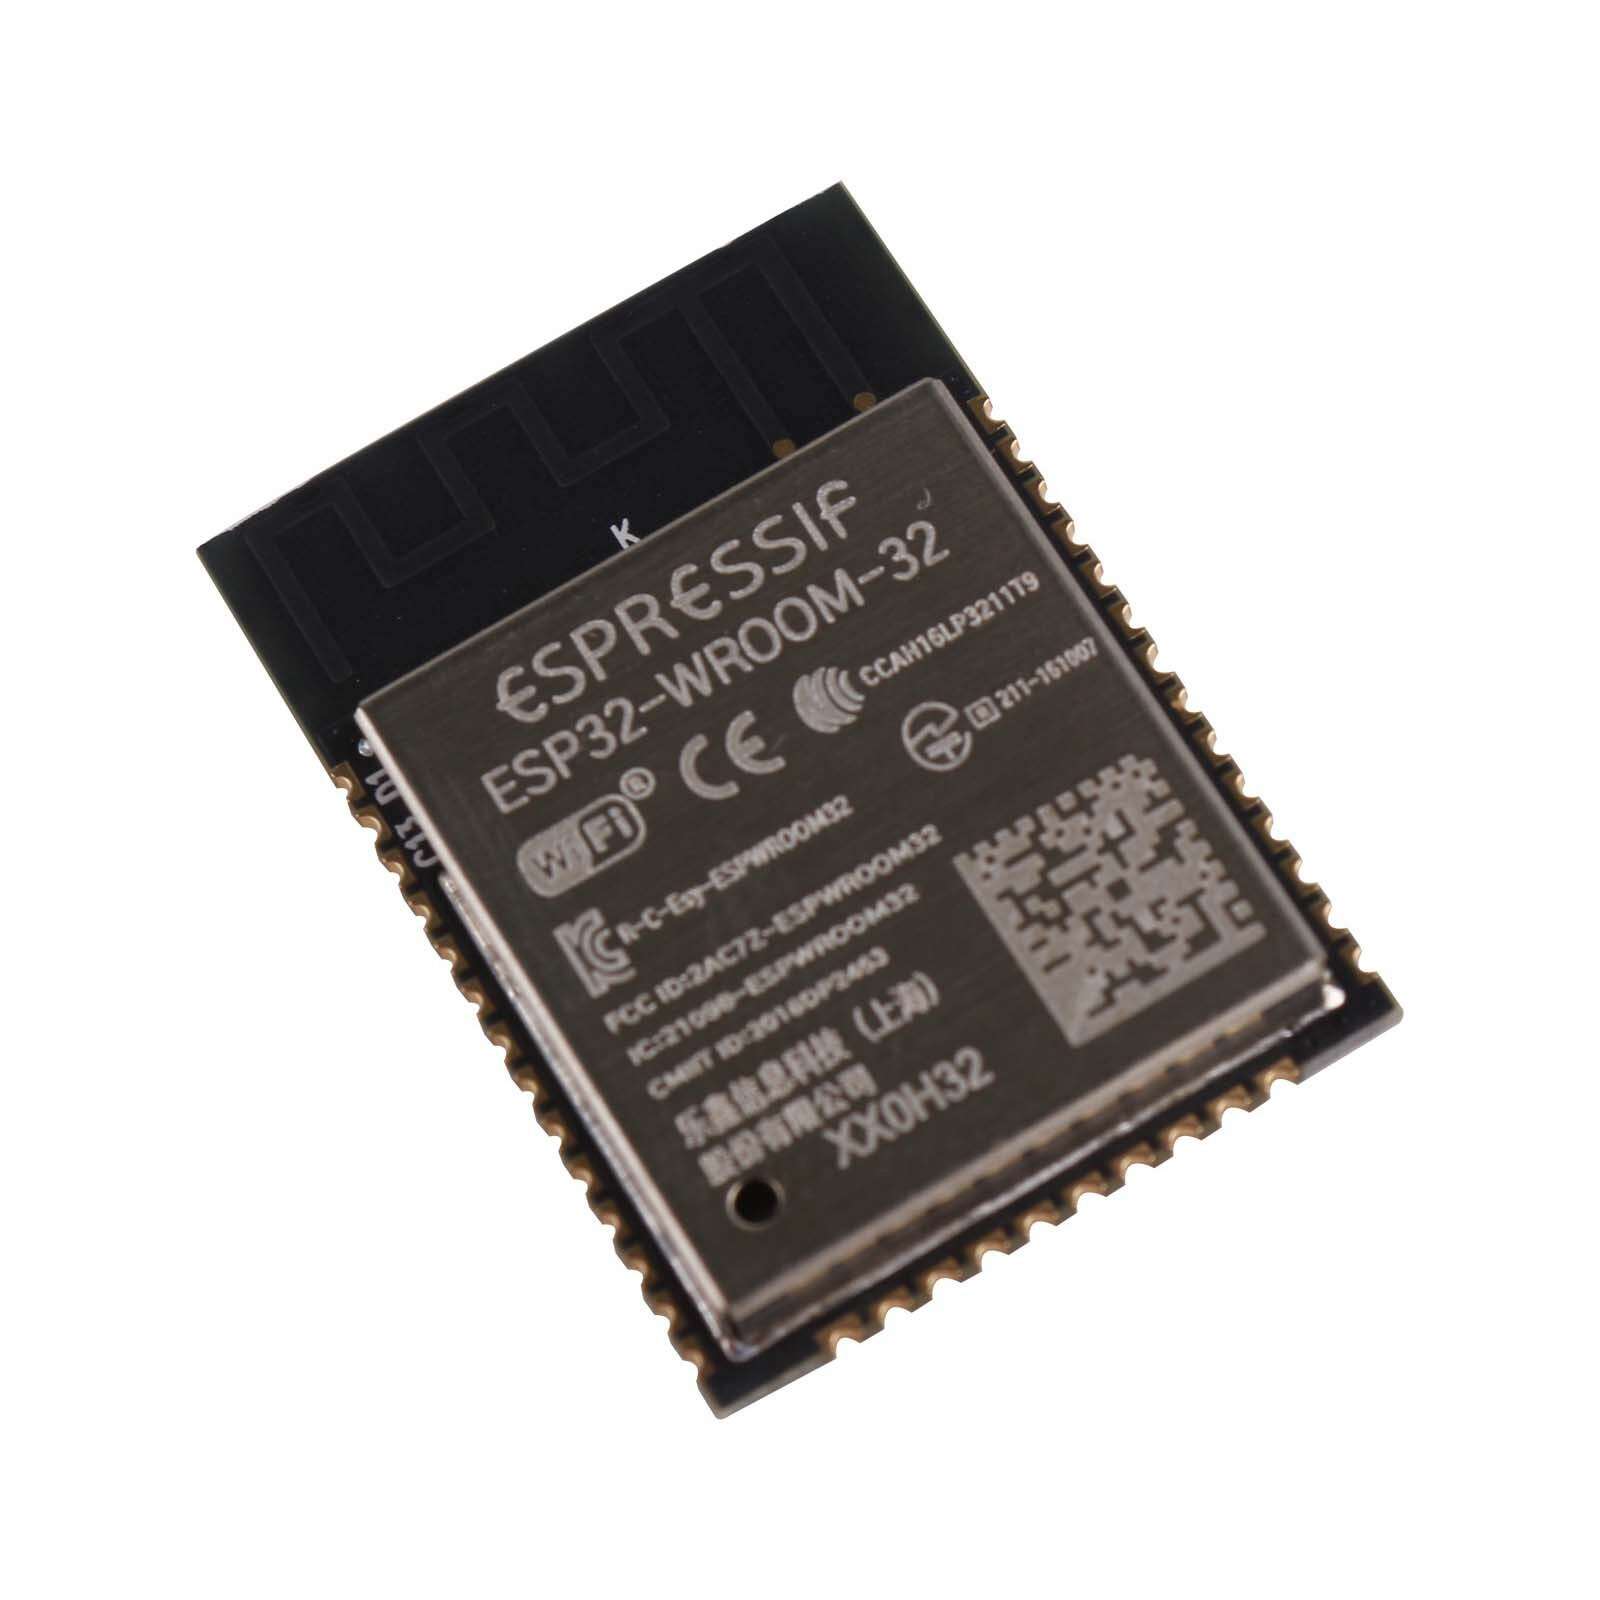 ESP32-WROOM-32 SMD,18×25.5mm WiFi Module